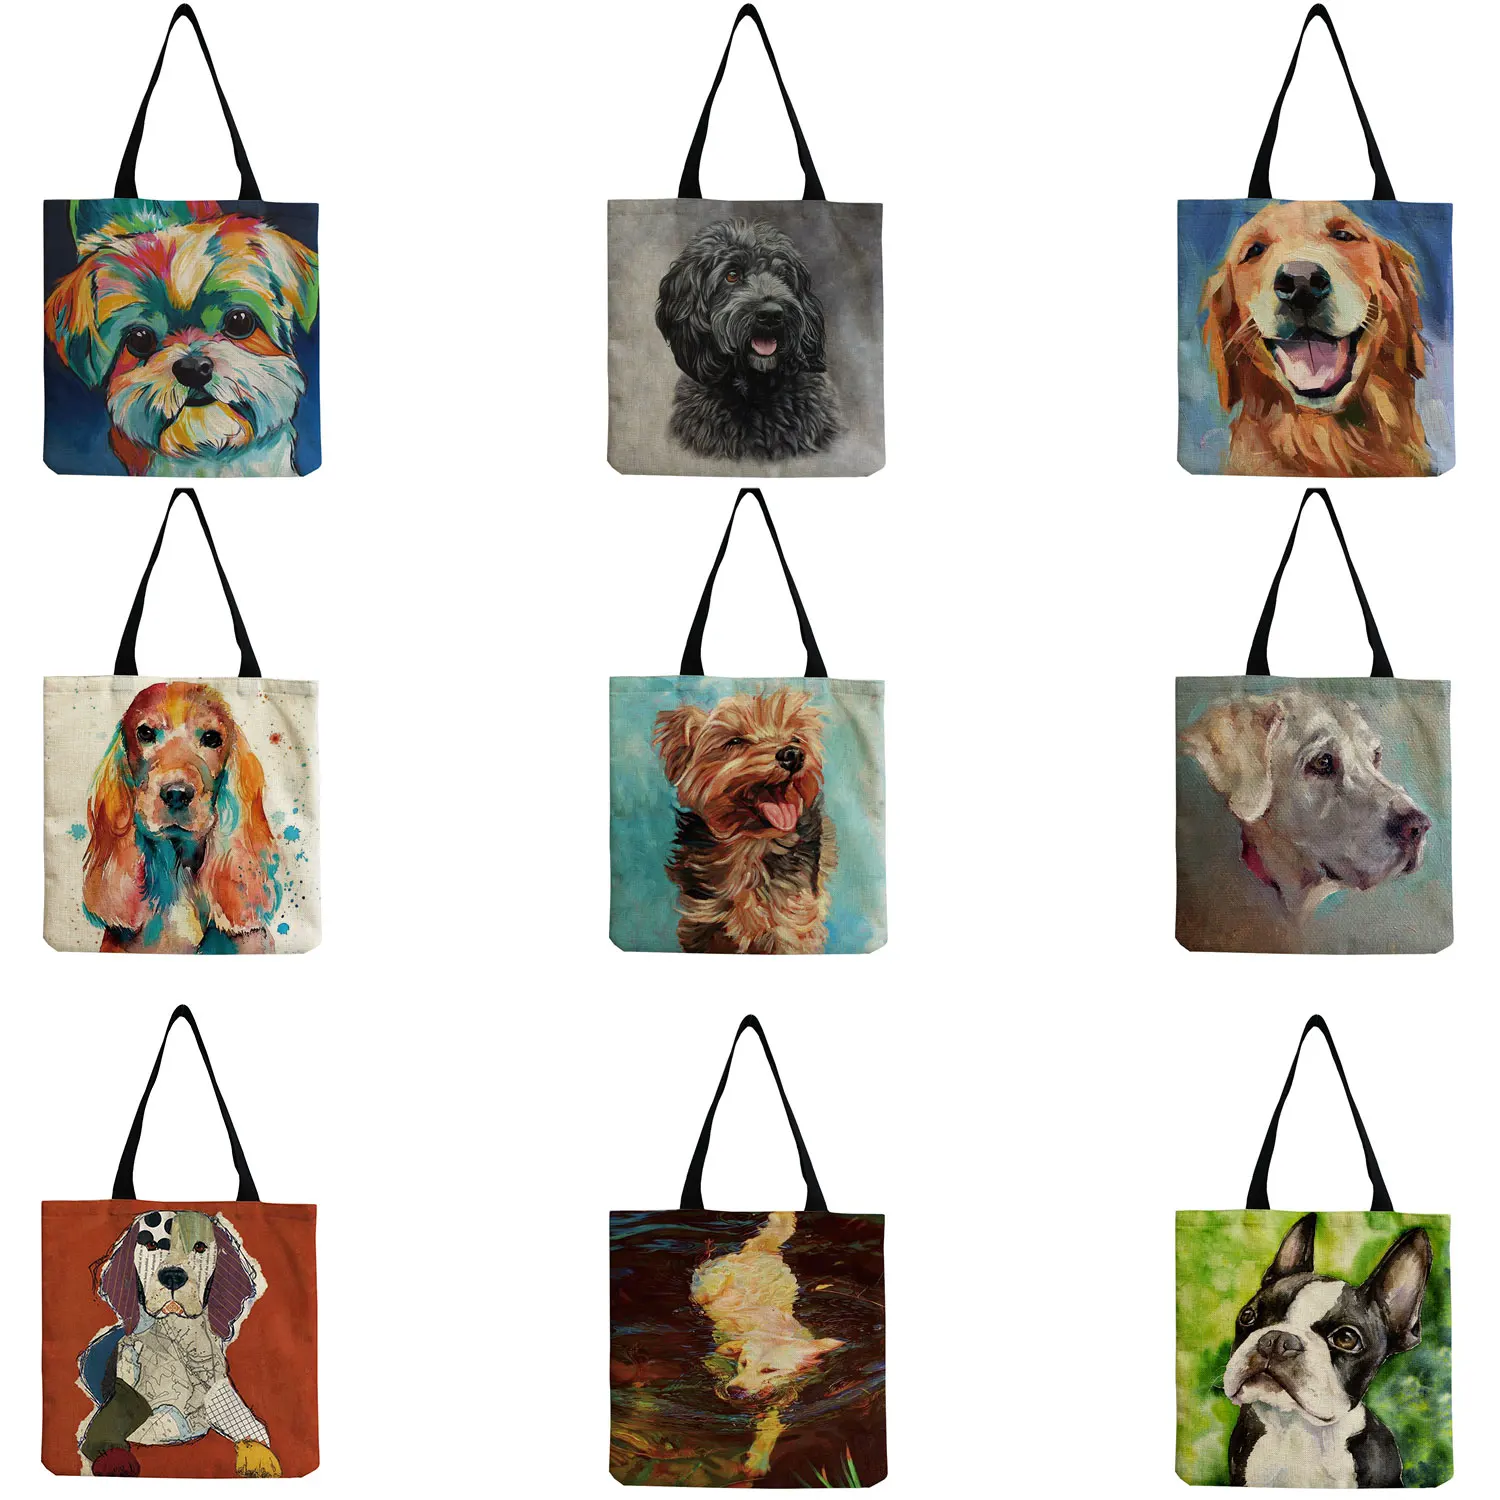 

Women Handbag Large Capacity Colors Oil Painting Dog Print Shopping Bags For Groceries Art Papillon Pug Retriever Shoulder Totes